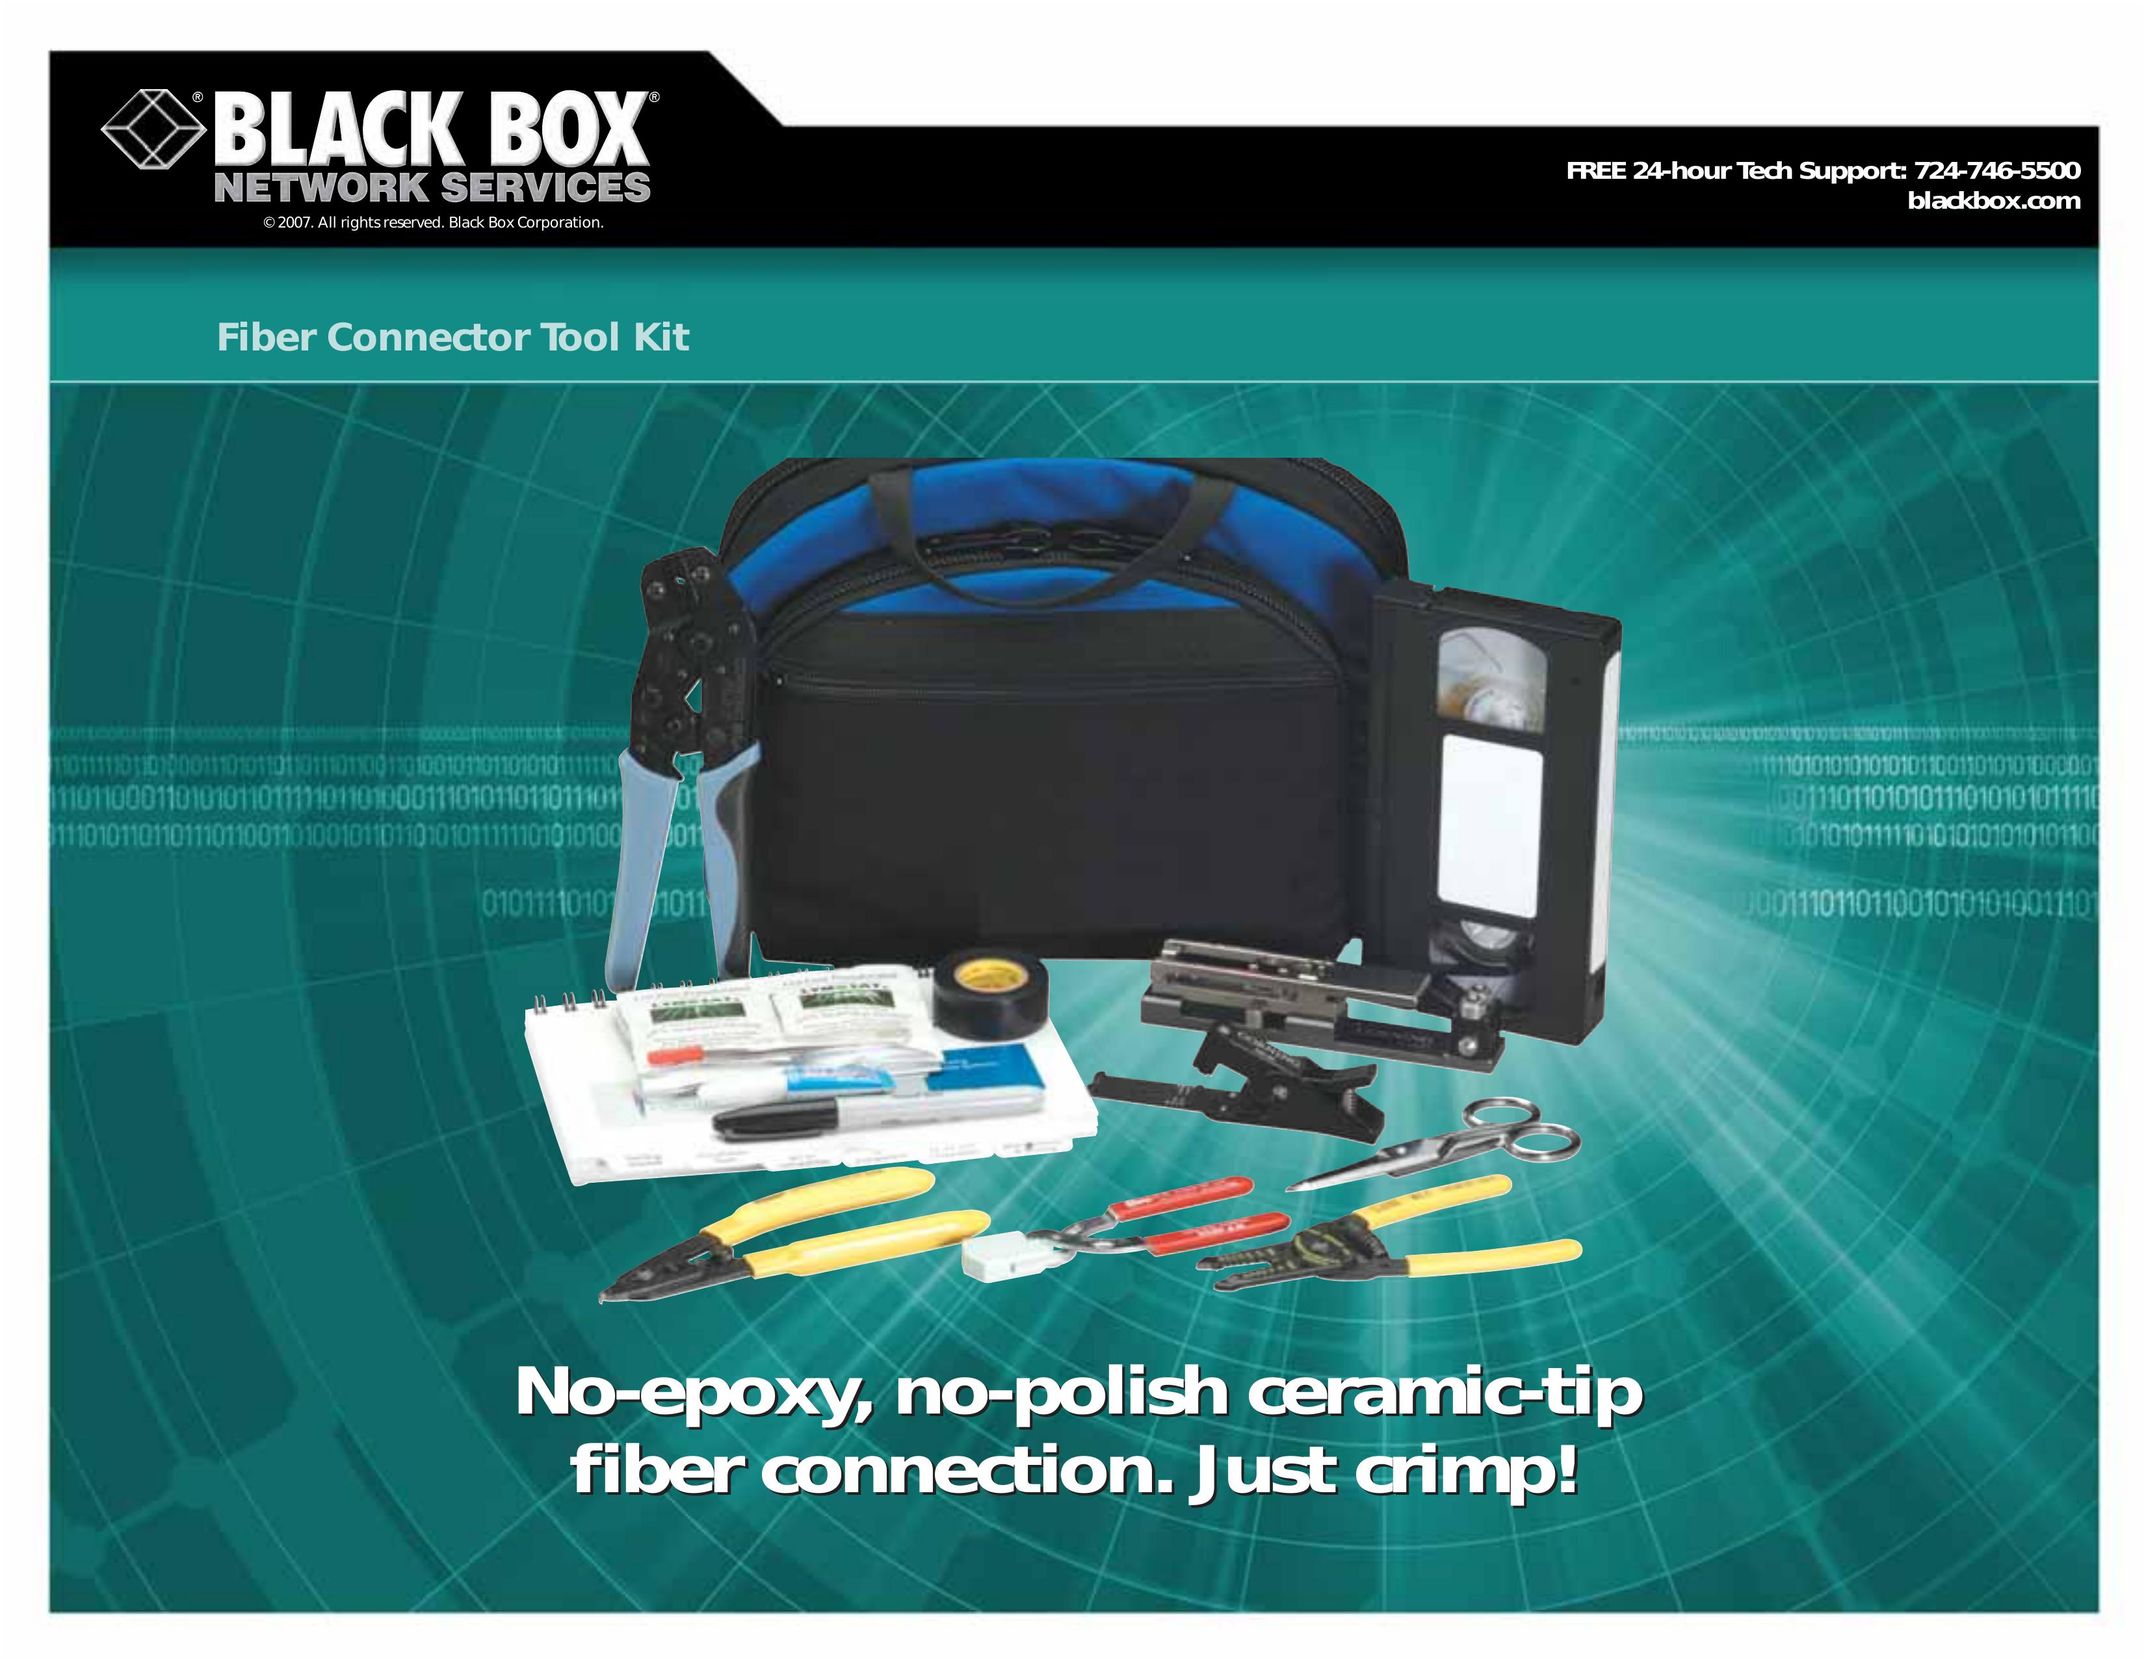 Black Box Fiber Connector Tool Kit Network Router User Manual